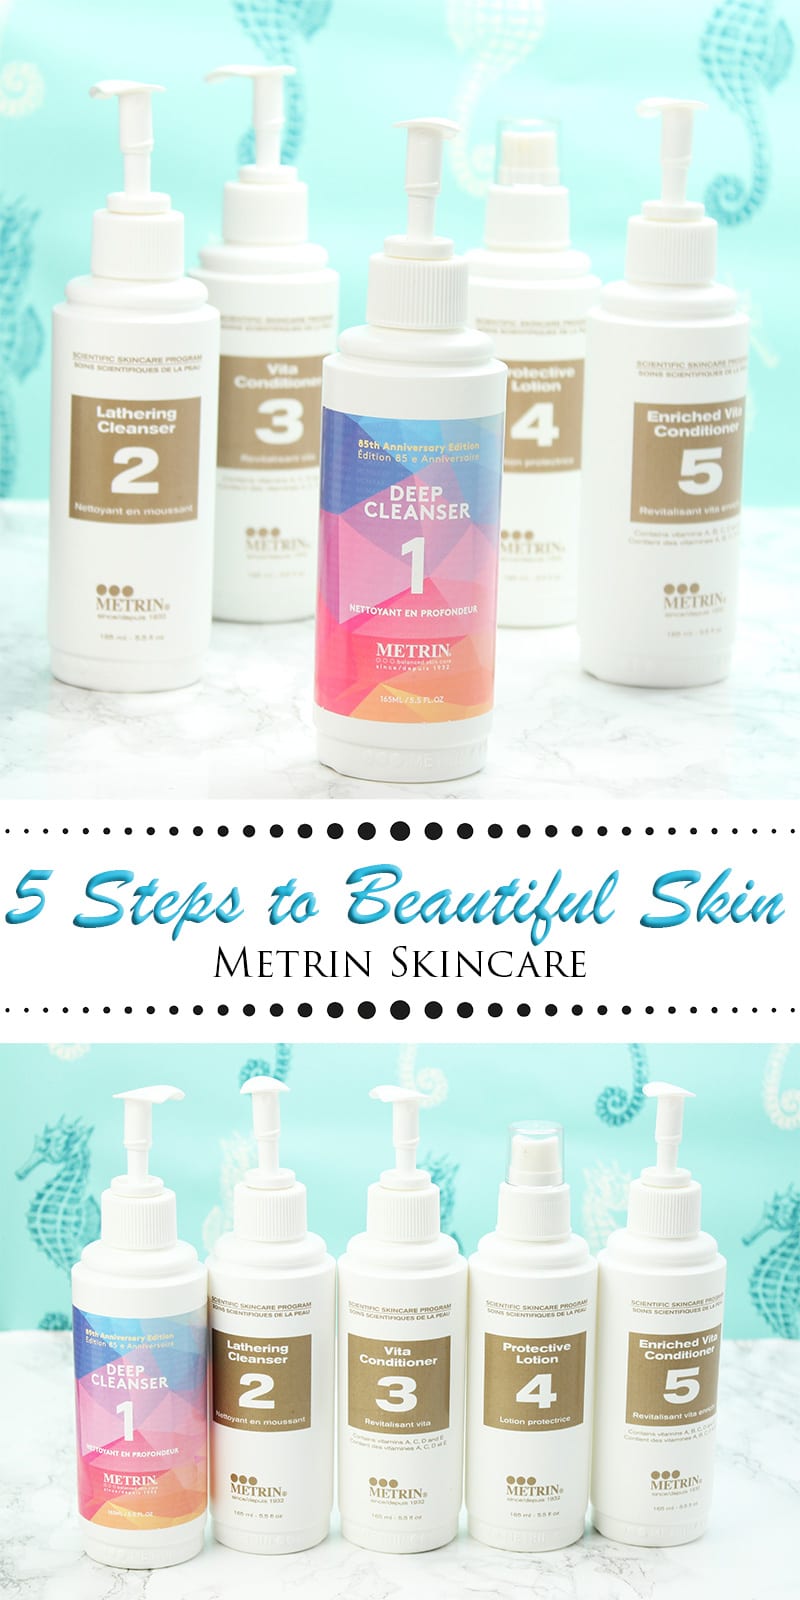 Metrin Skincare Review - Cruelty Free - 5 Steps to Beautiful Skin